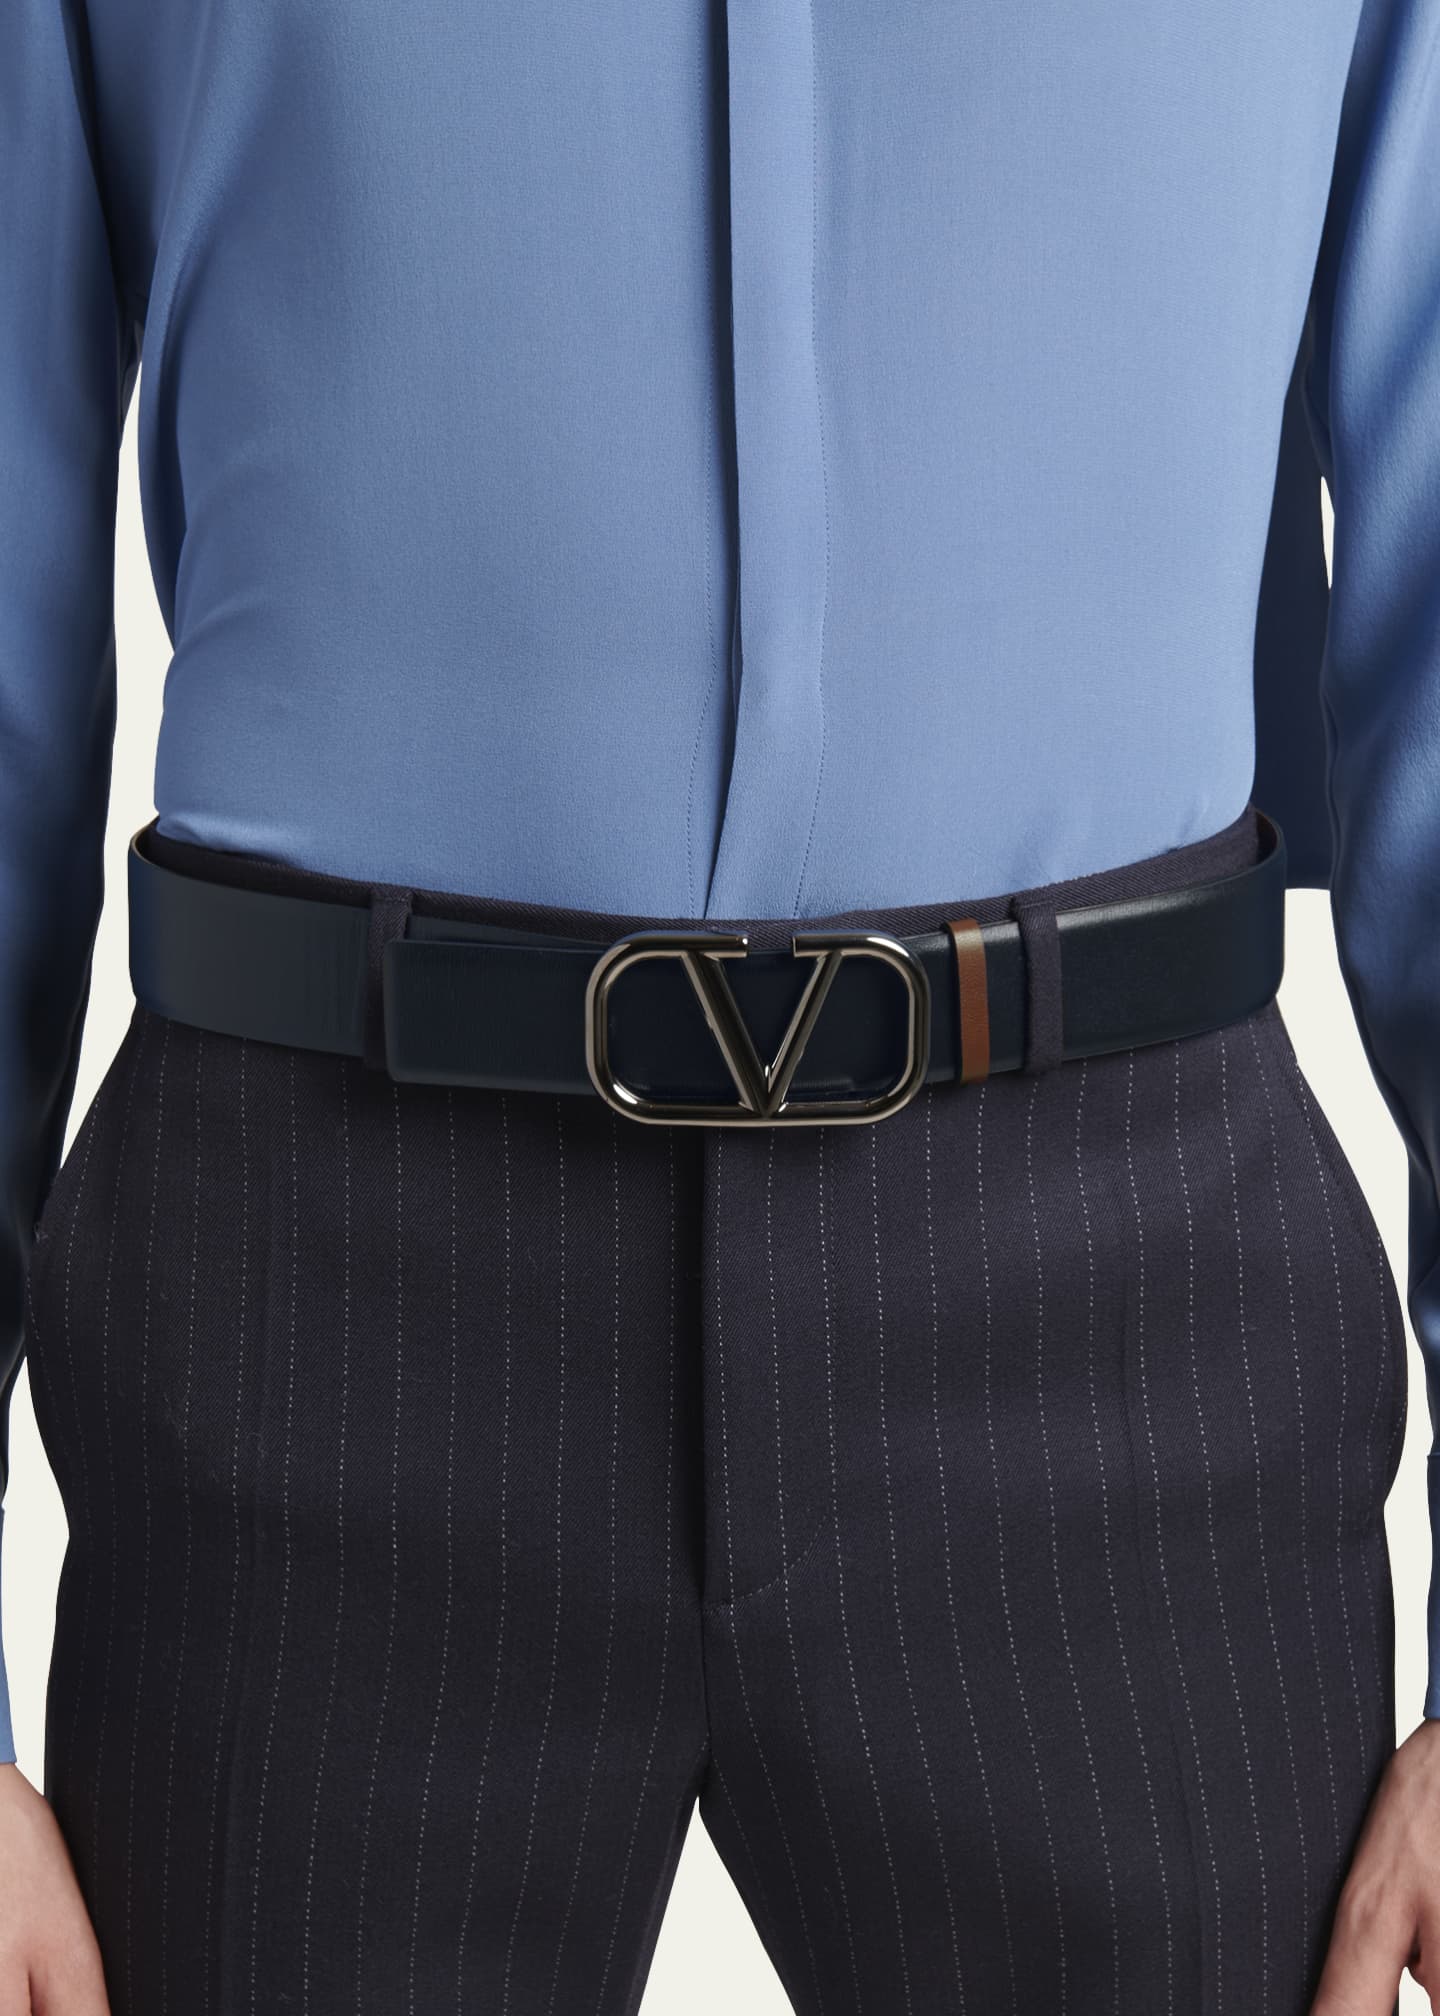 Valentino Garavani Monogram-Jacquard Buckle Belt